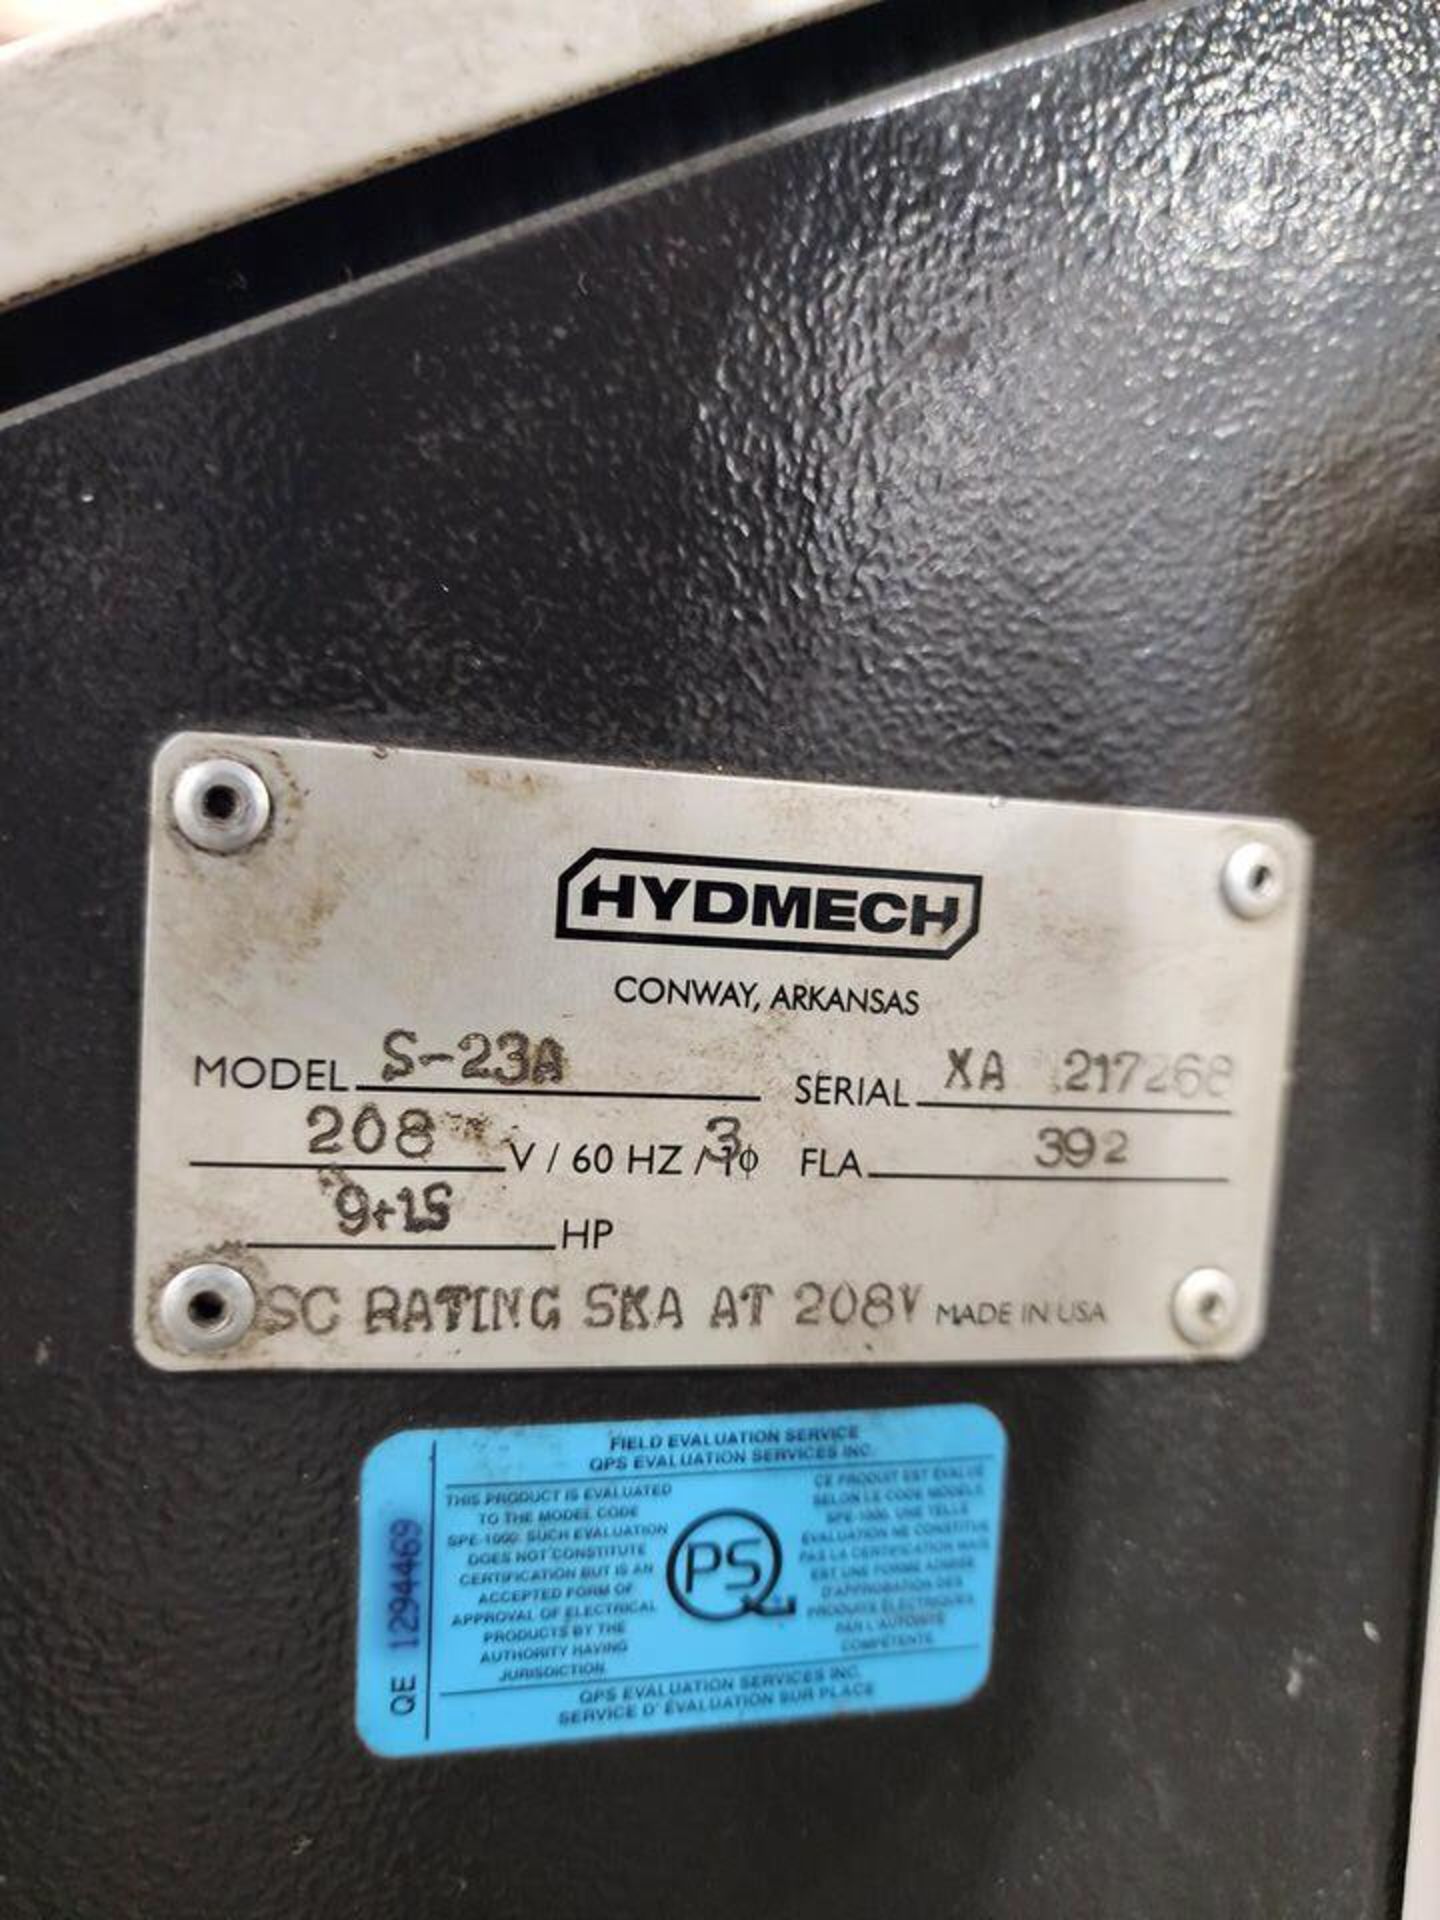 Hyd-Mech S-23A Automatic Scissor Bandsaw 208V, 3PH, 9+15HP, 39.2FLA; W/ Controller, Model: ACSD1, - Image 29 of 30